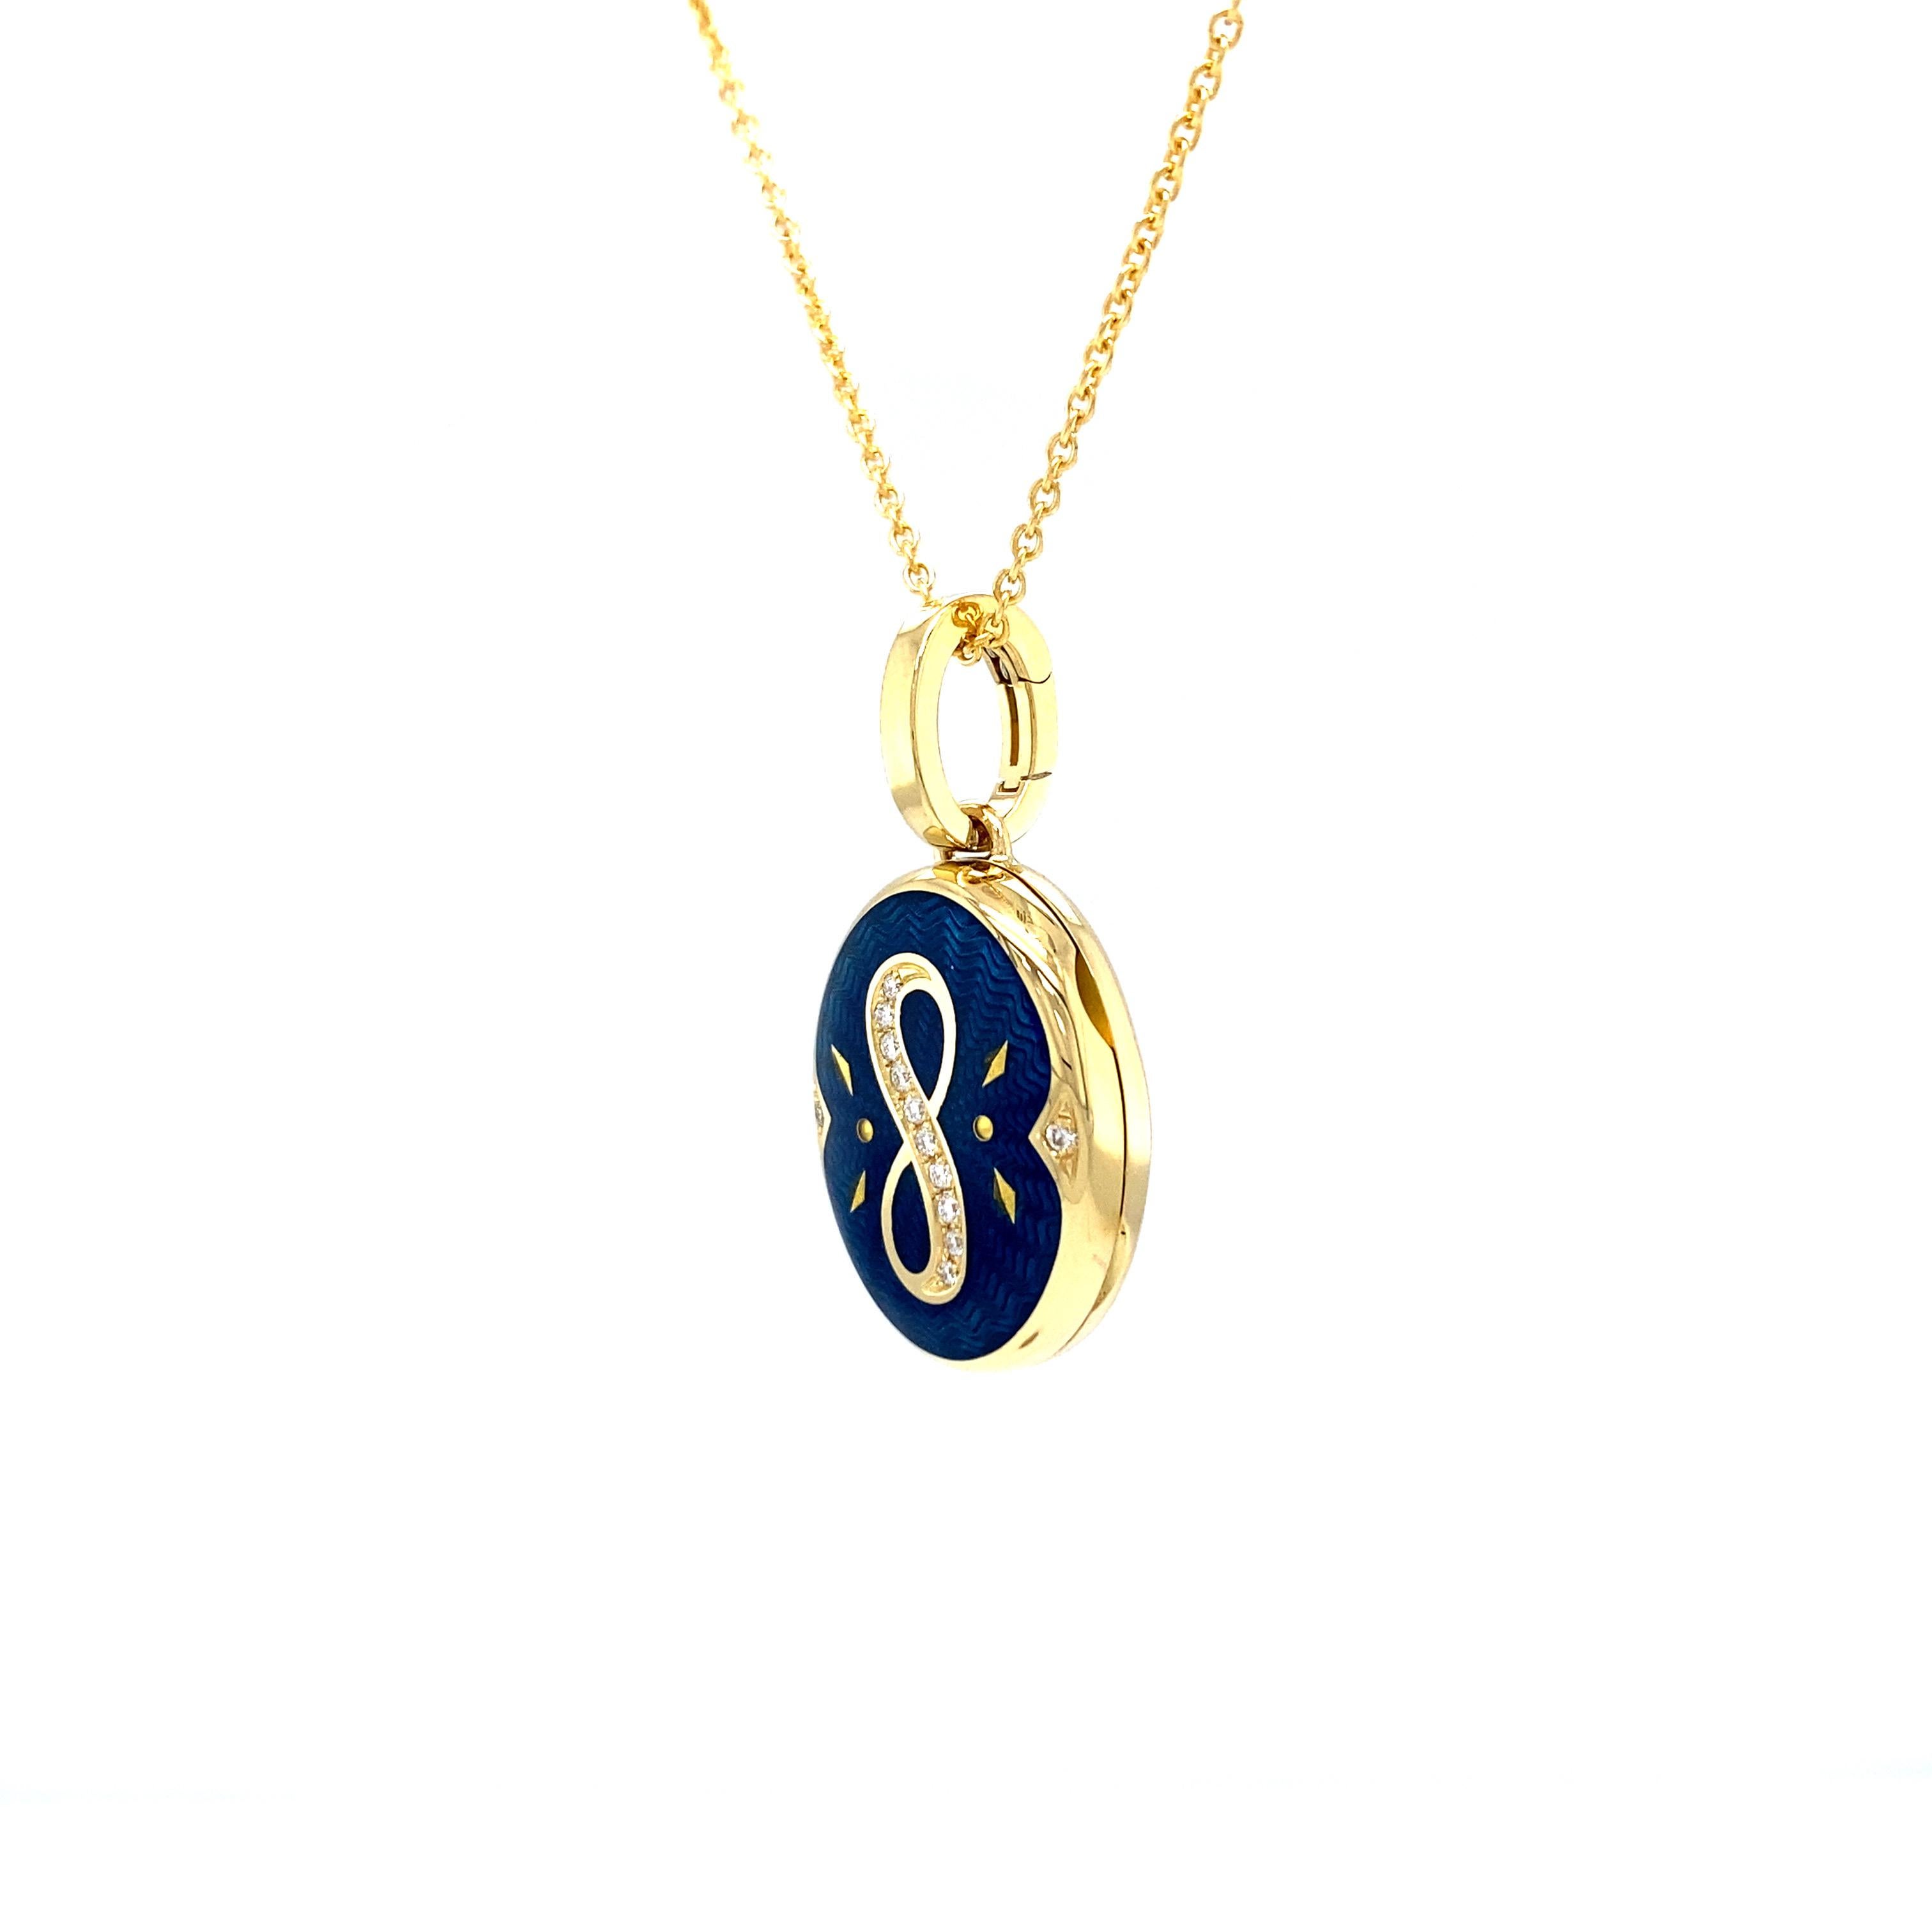 Women's Oval Locket Pendant Necklace 18k Yellow Gold Blue Enamel 12 Diamonds 0.08 ct GVS For Sale